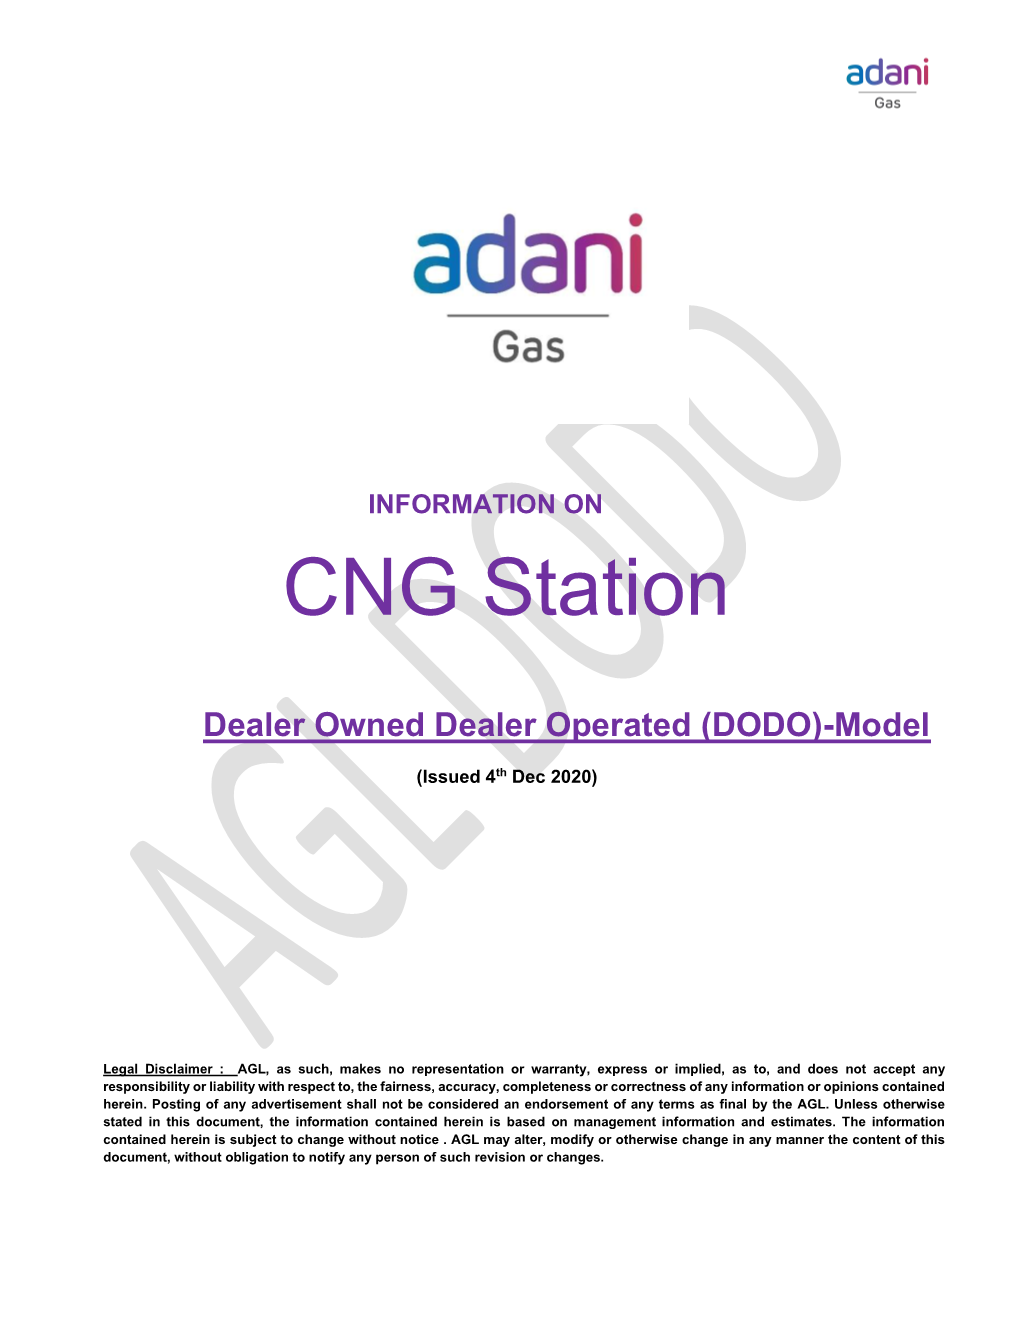 Information on CNG Station (DODO Model)